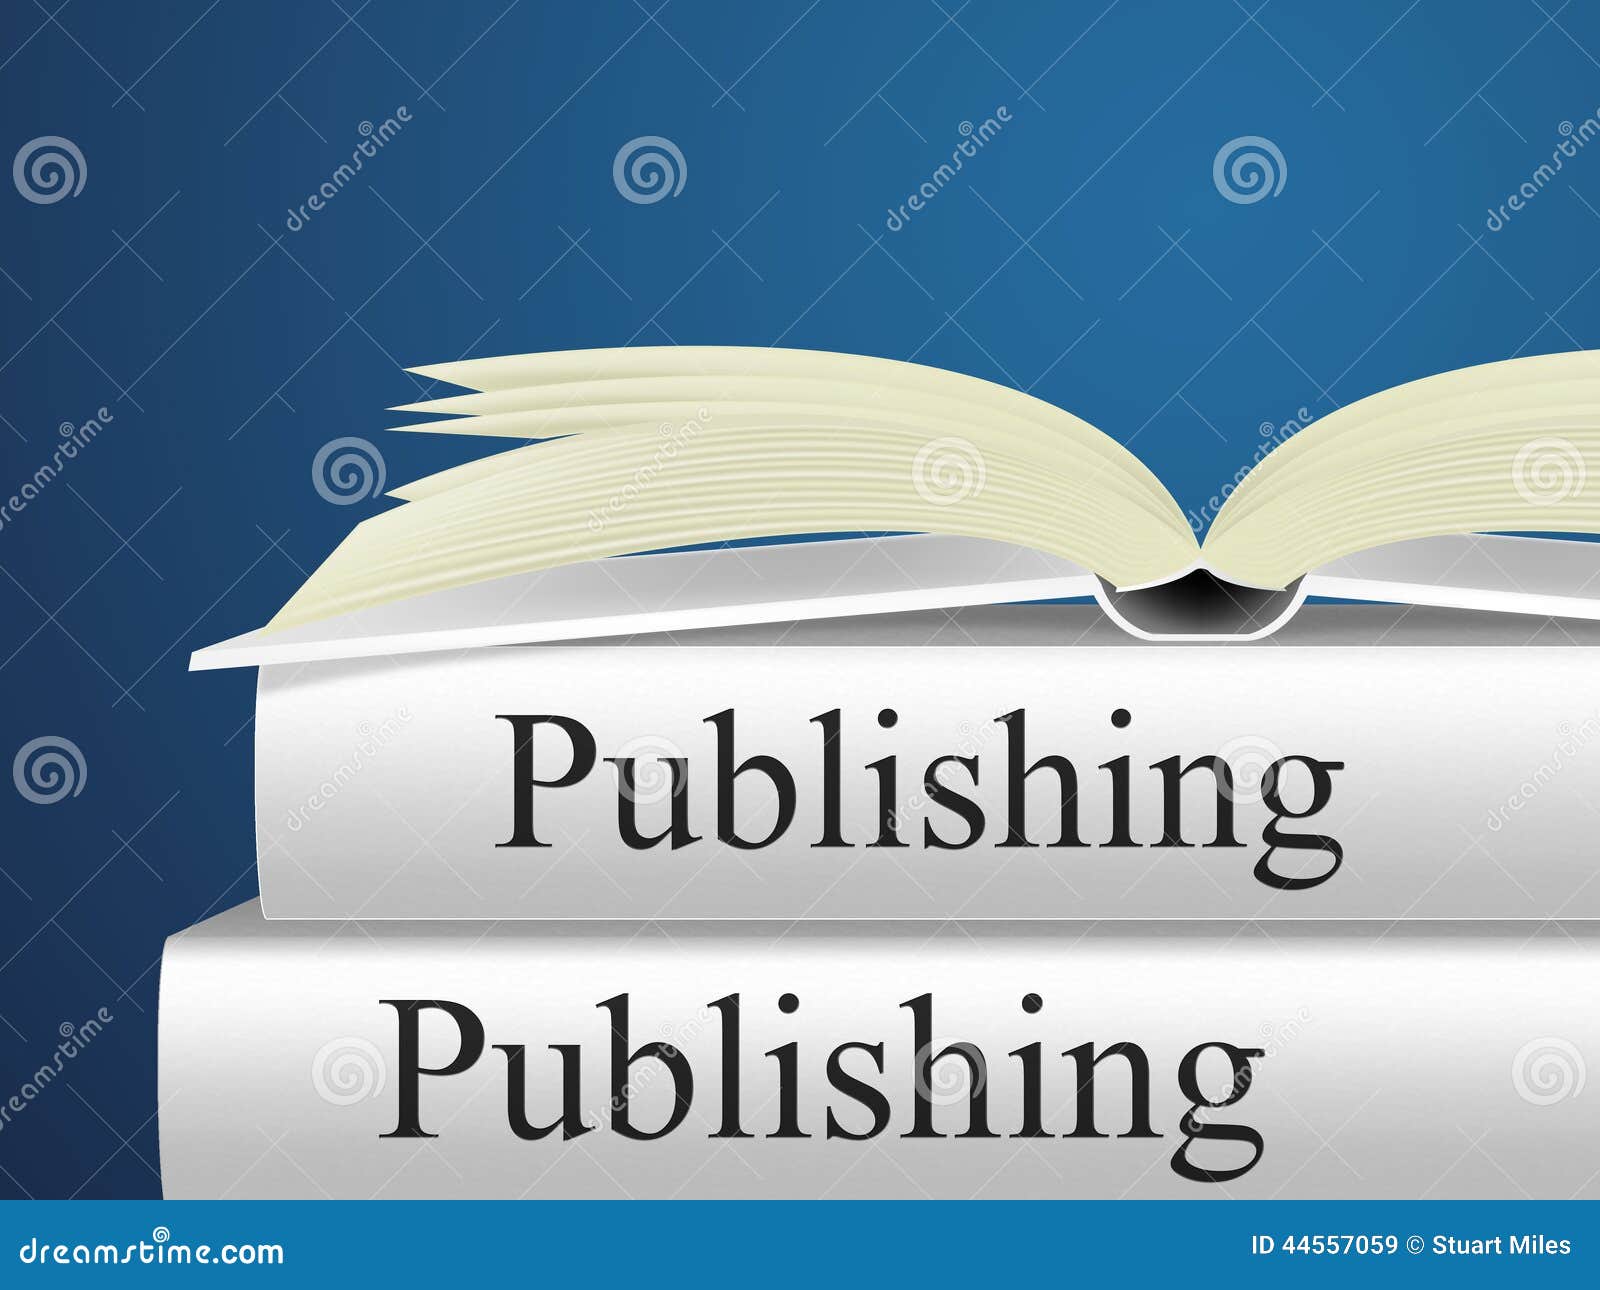 books publishing shows textbook e-publishing and publisher